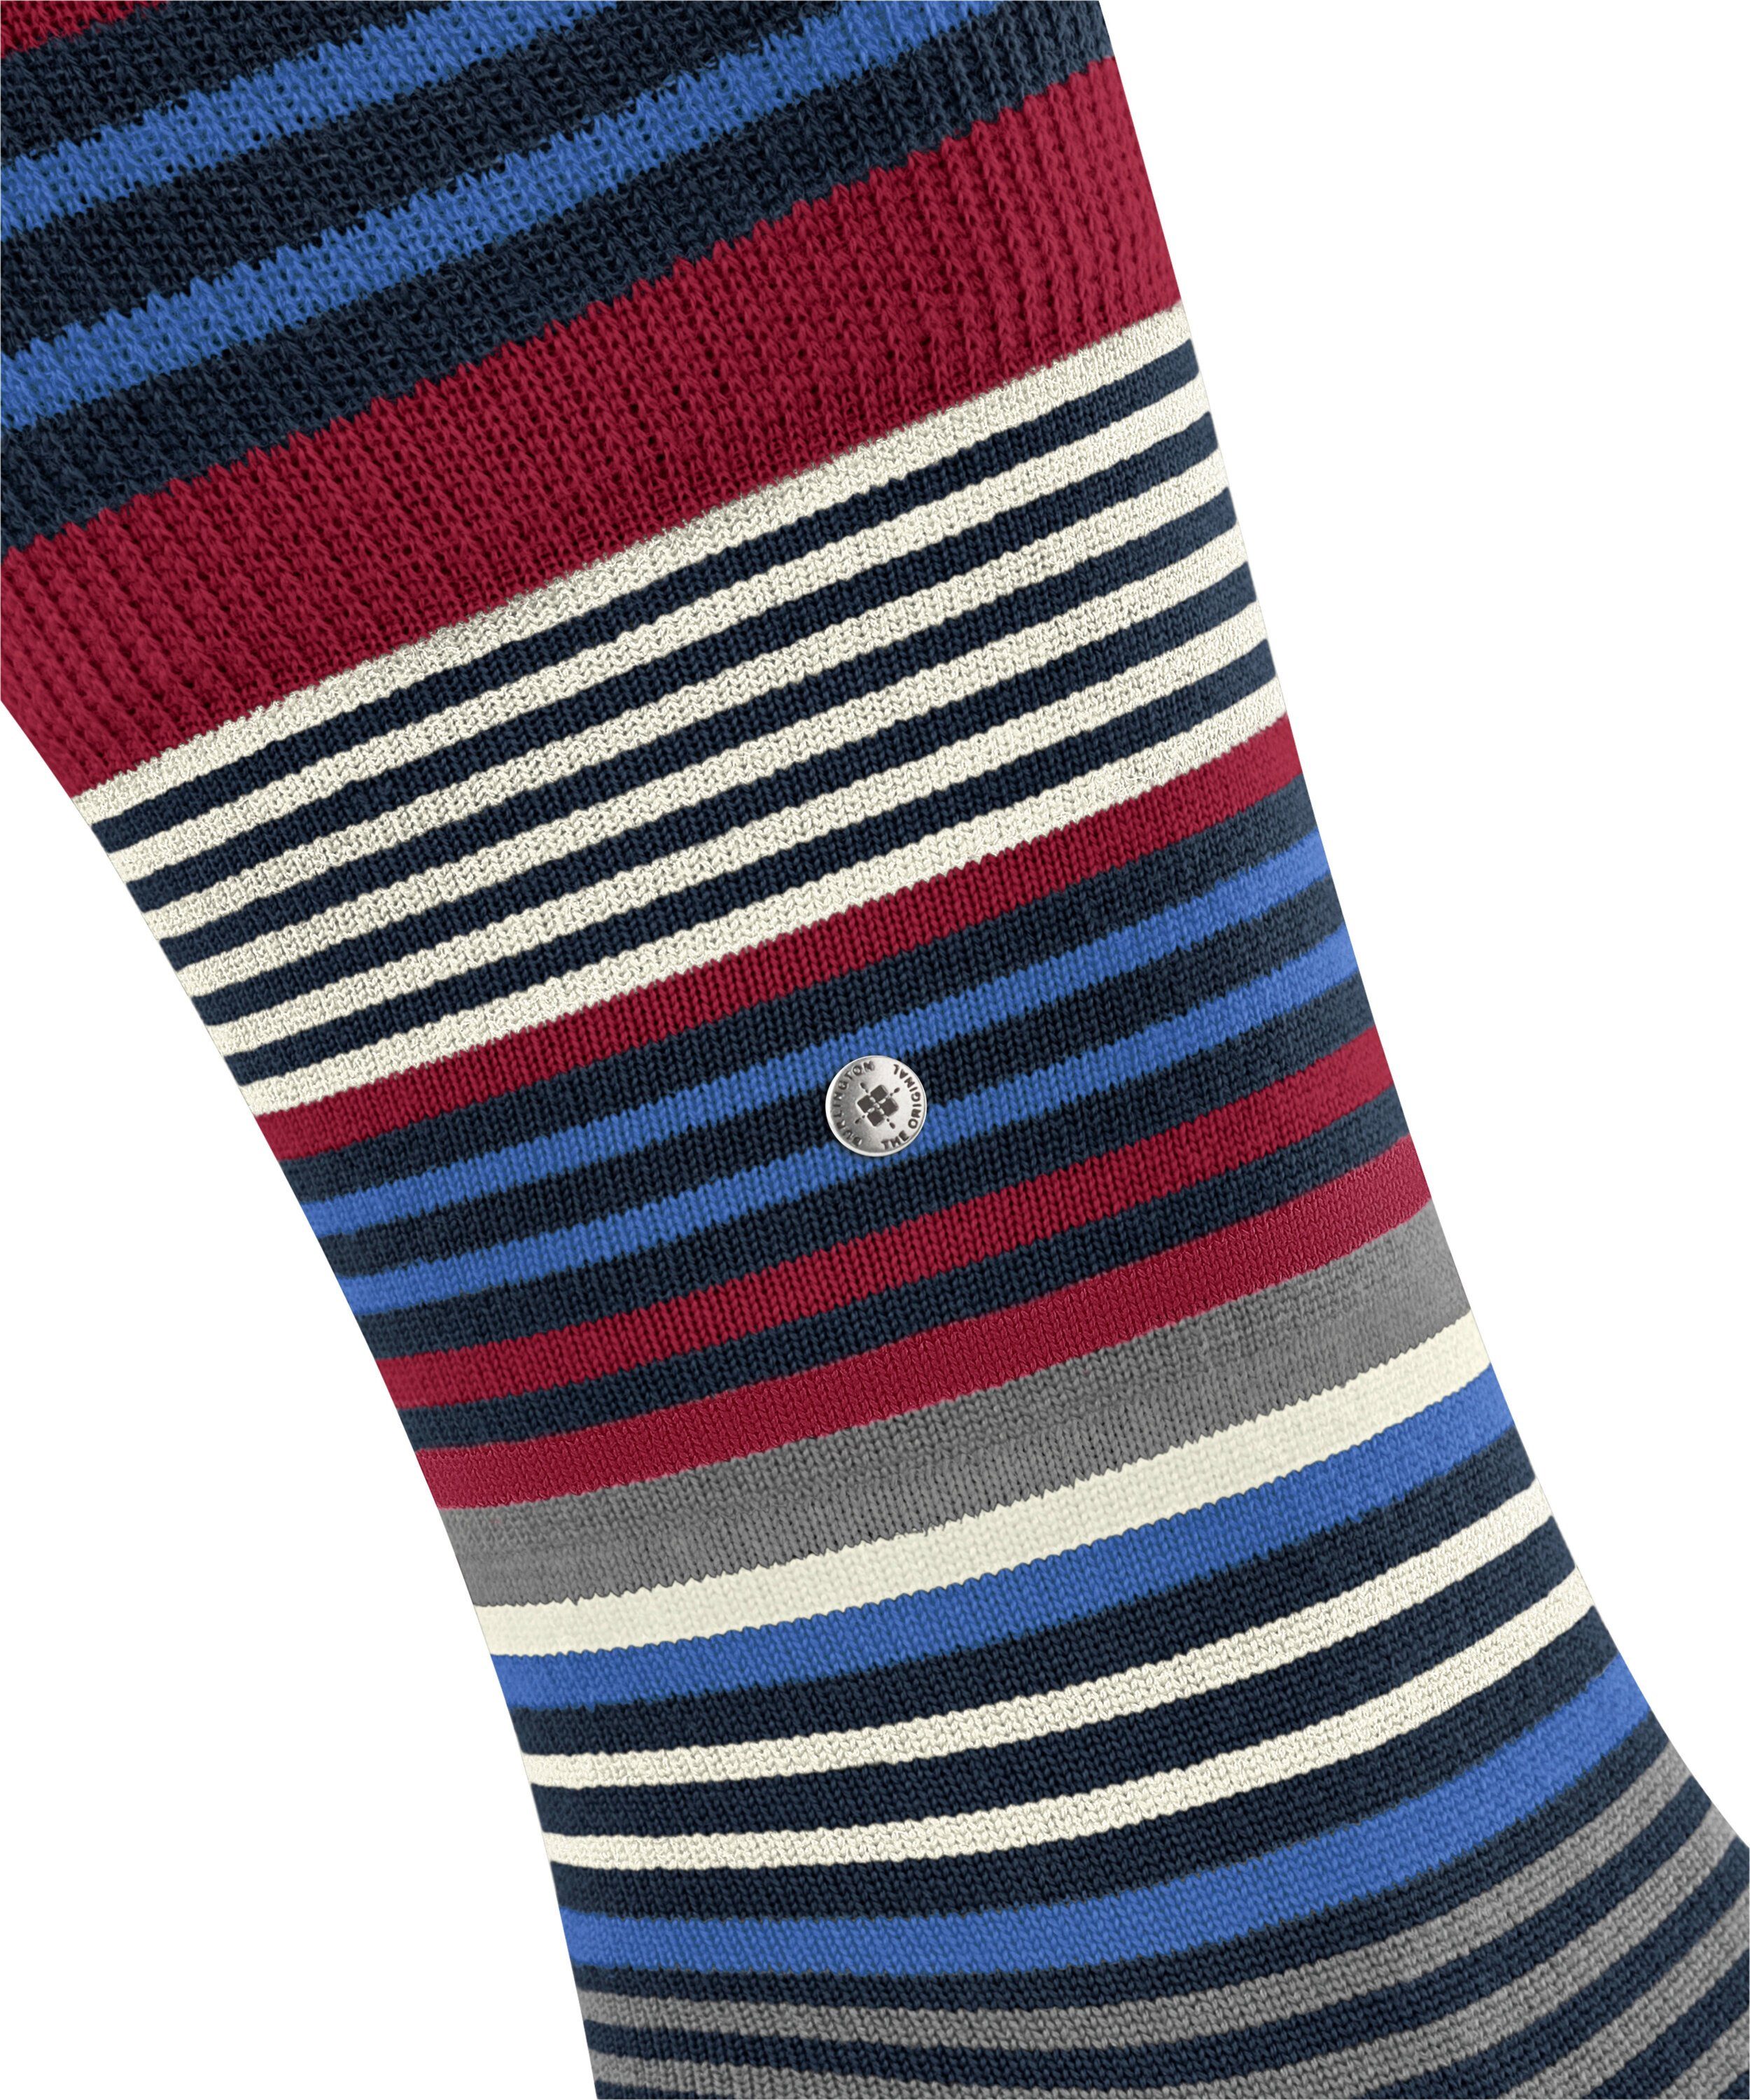 Burlington Socken Stripe (6120) (1-Paar) marine